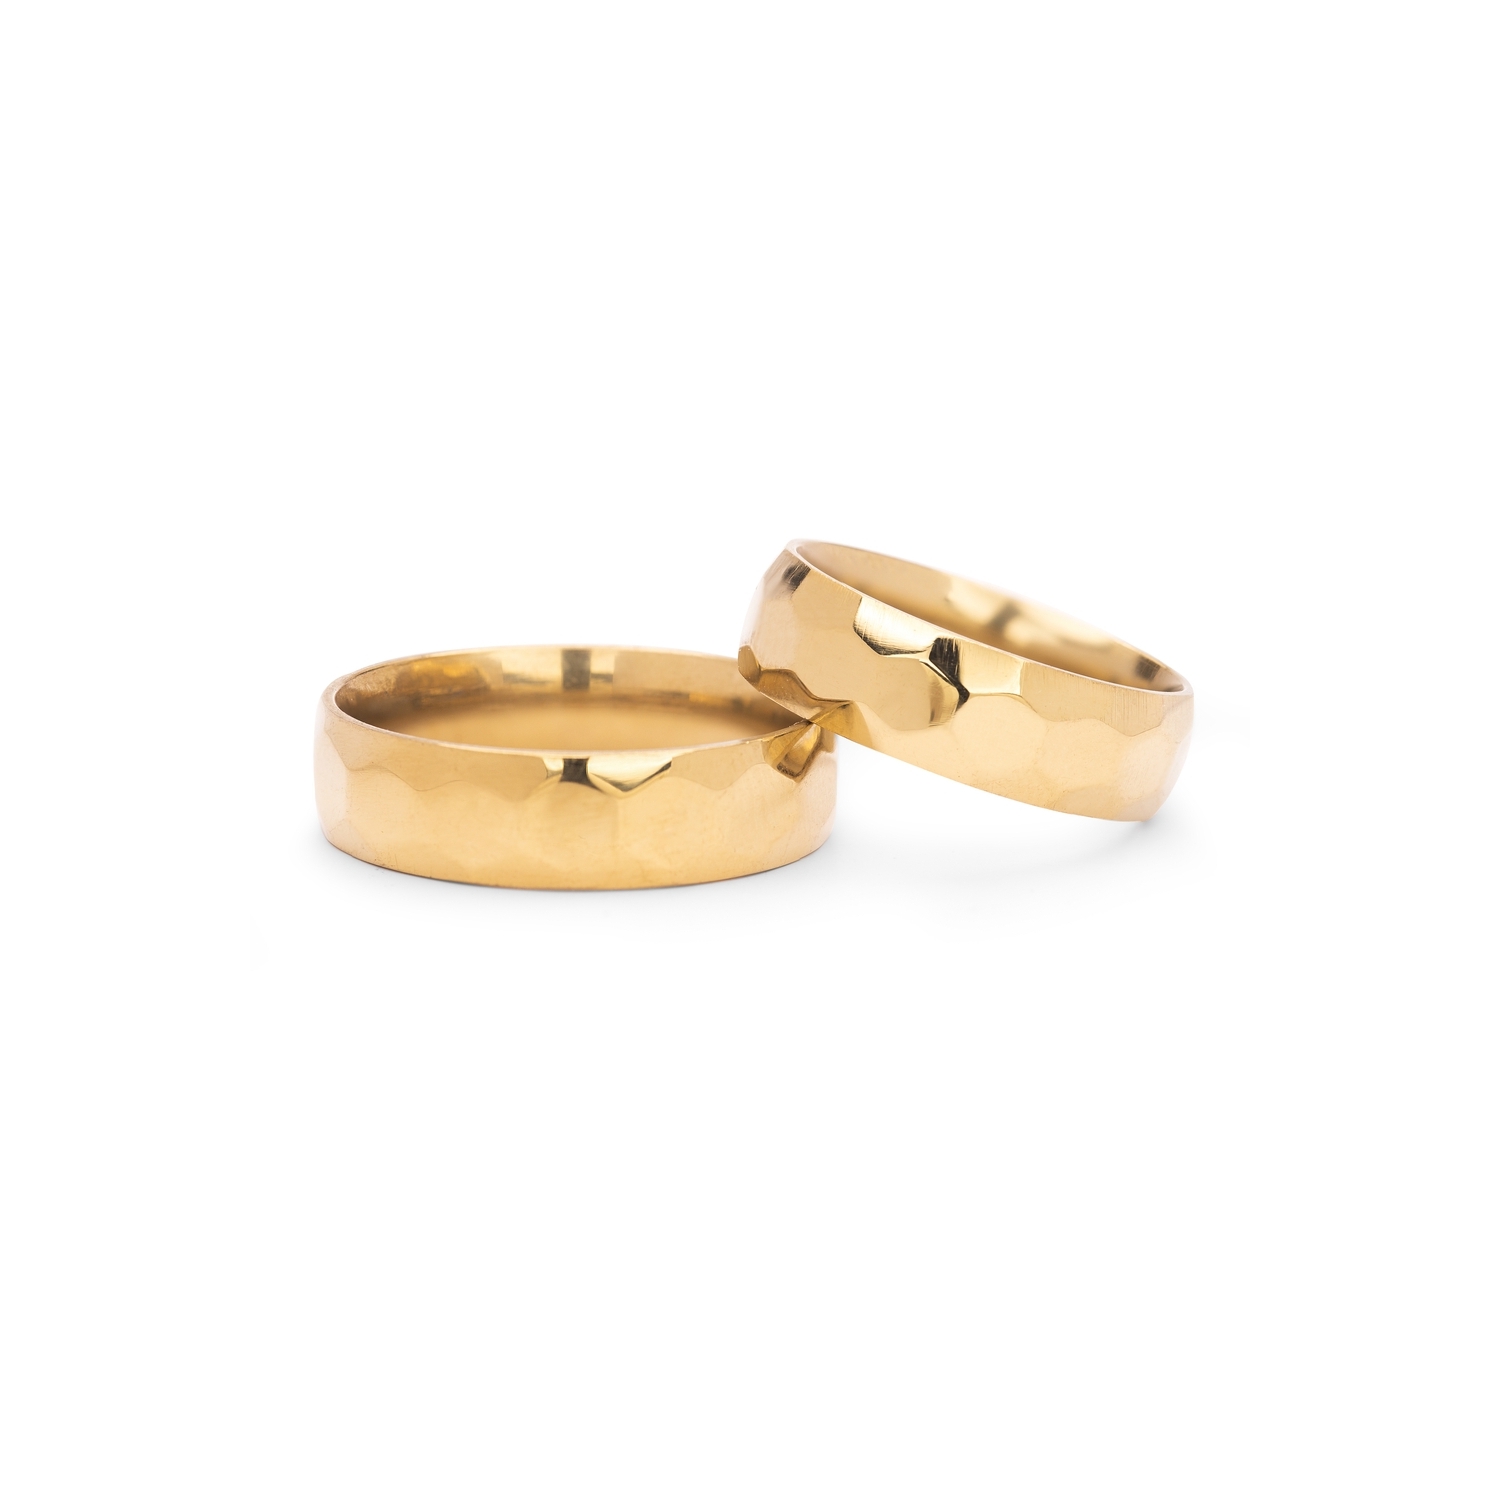 Gold wedding rings "VKA 310"